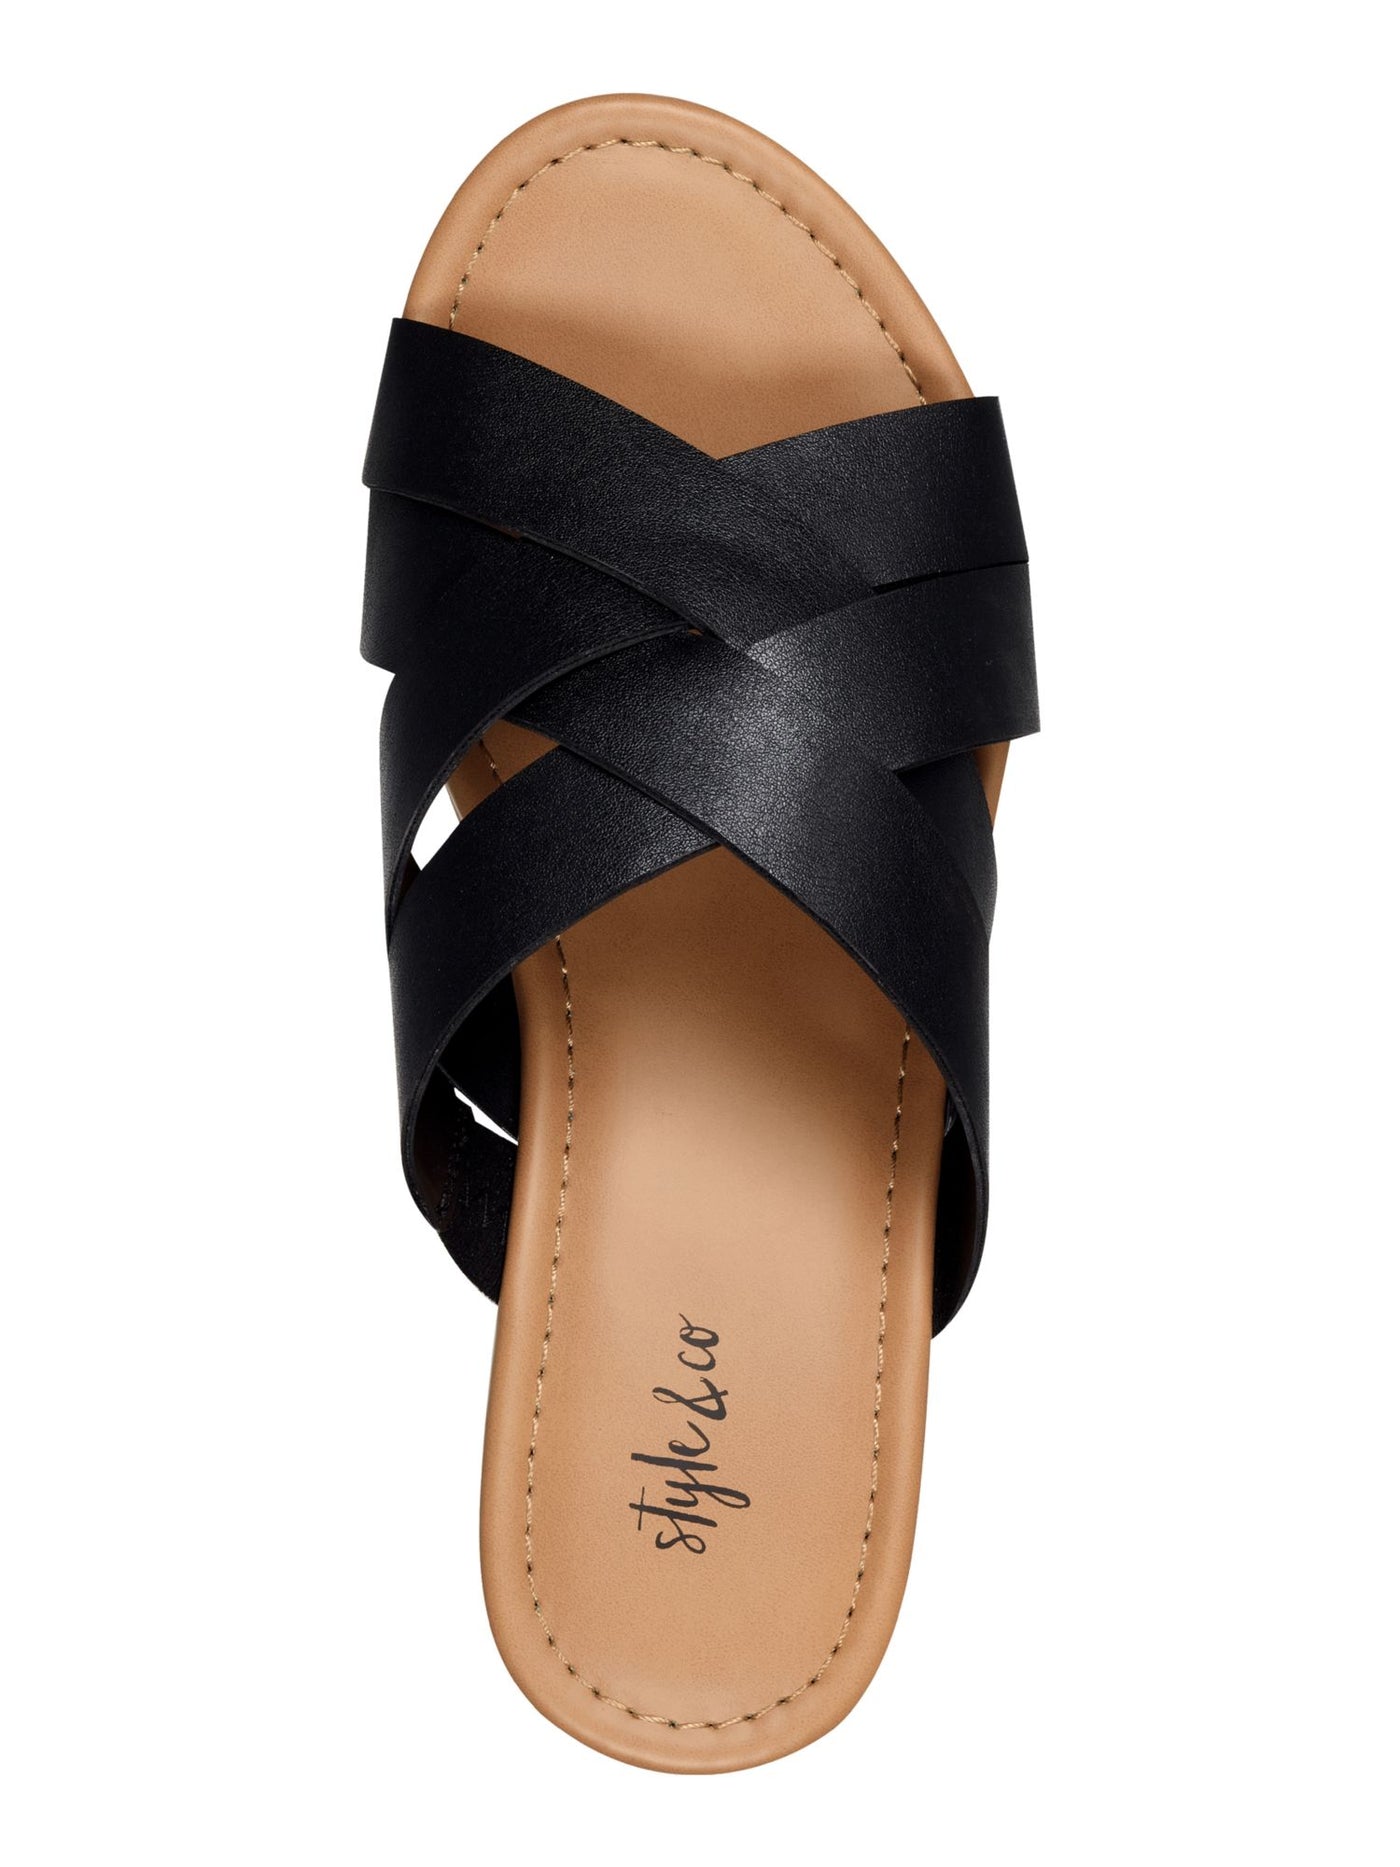 STYLE & COMPANY Womens Black 1-1/2" Platform Comfort Woven Violettee Round Toe Wedge Slip On Heeled Sandal 10 M